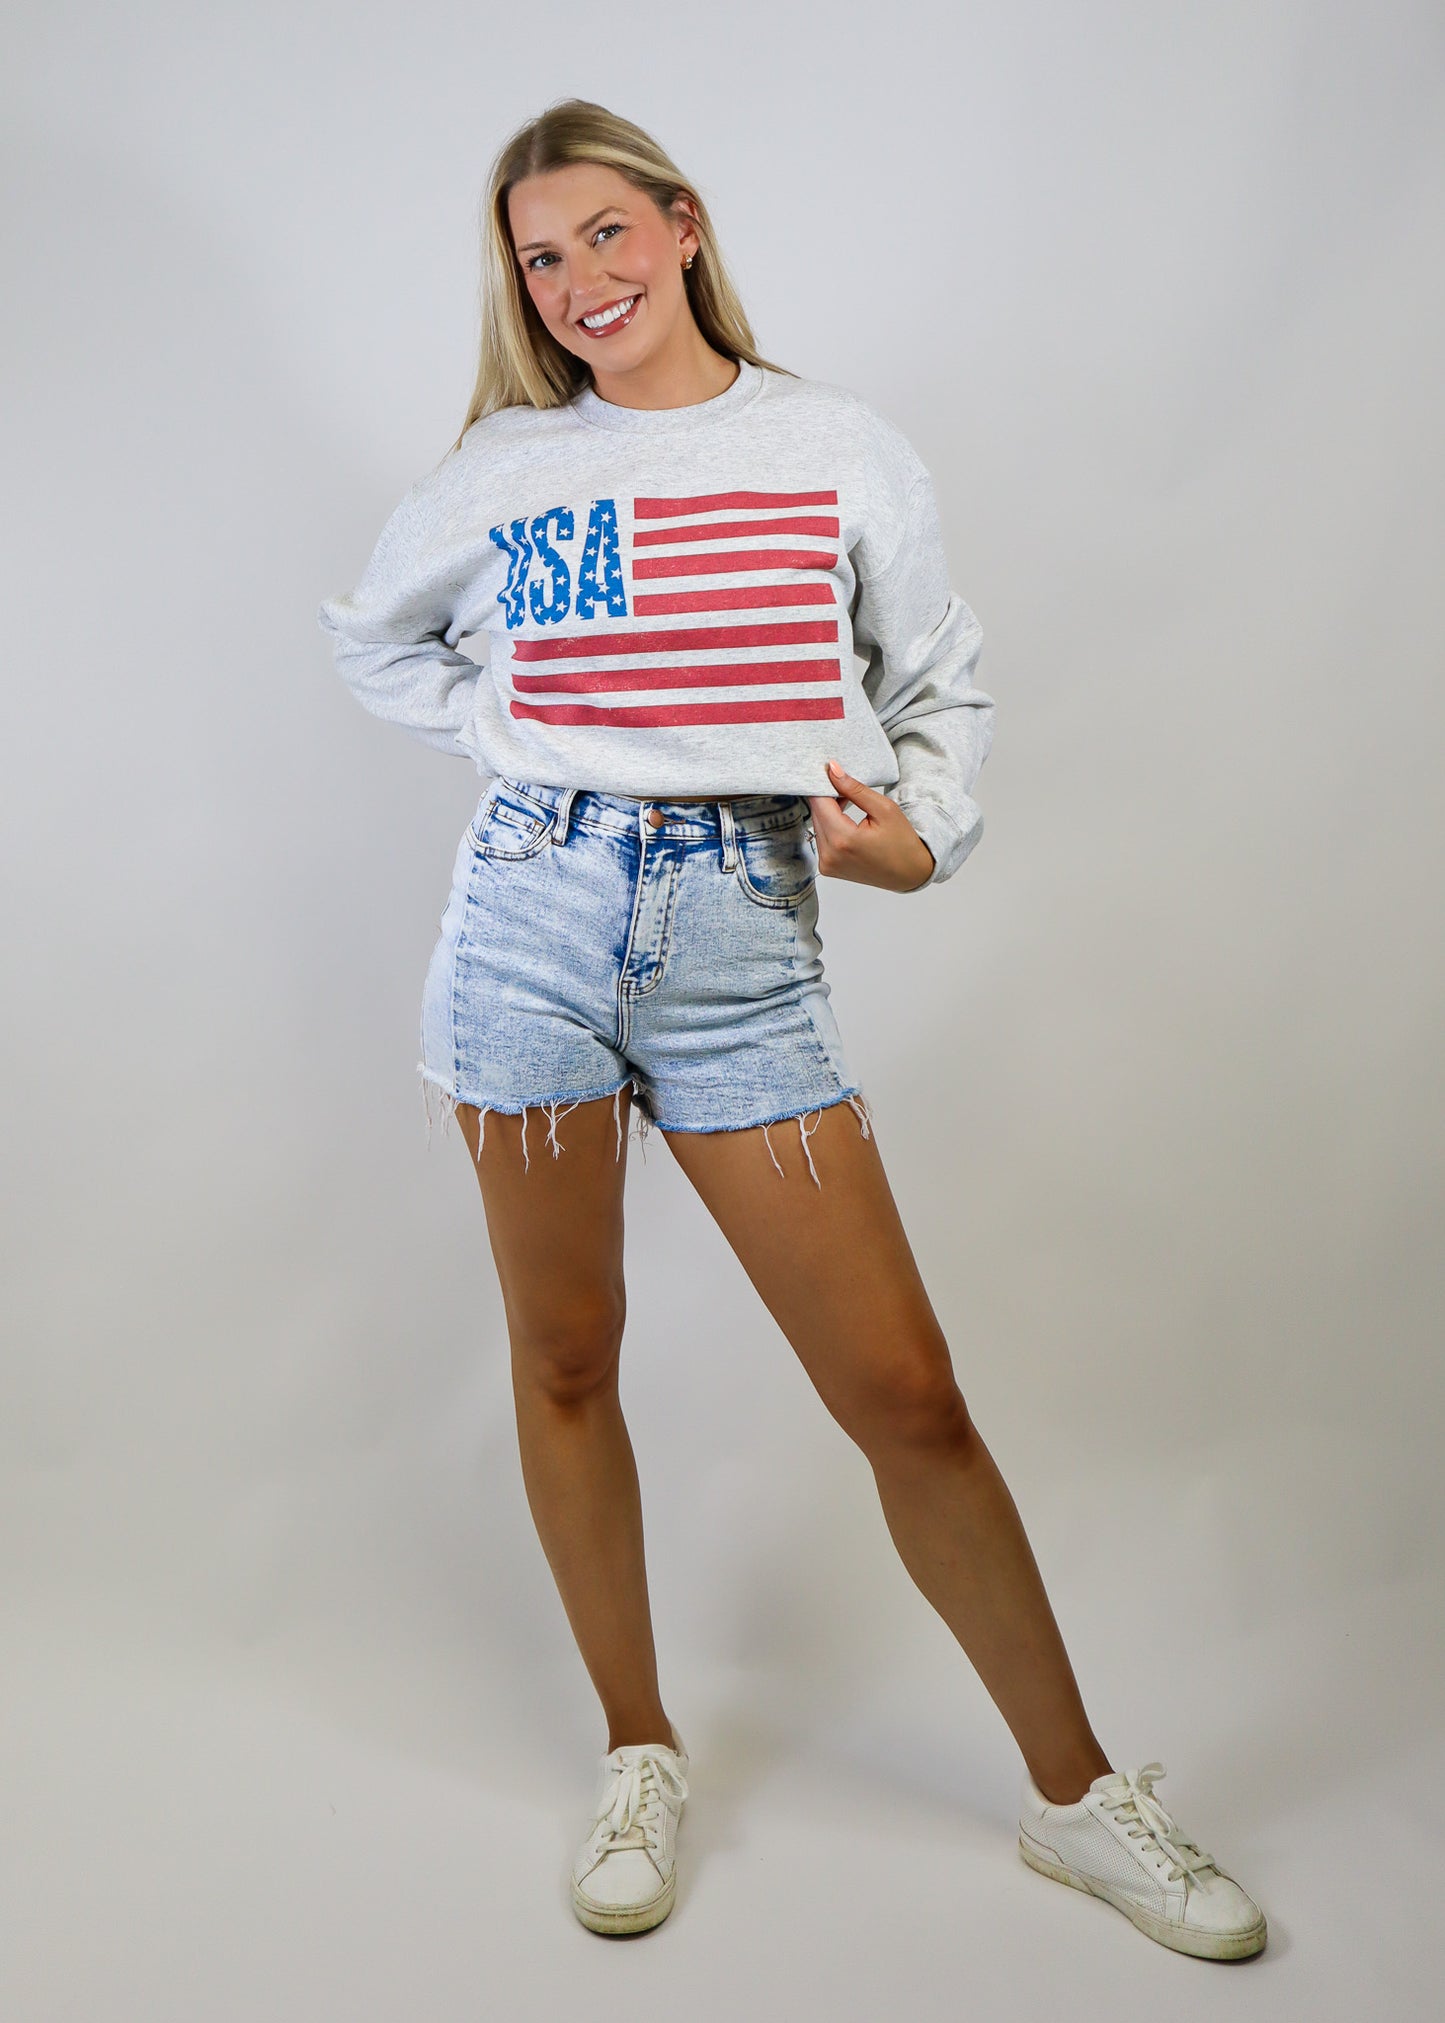 USA Stars + Stripes Sweatshirt